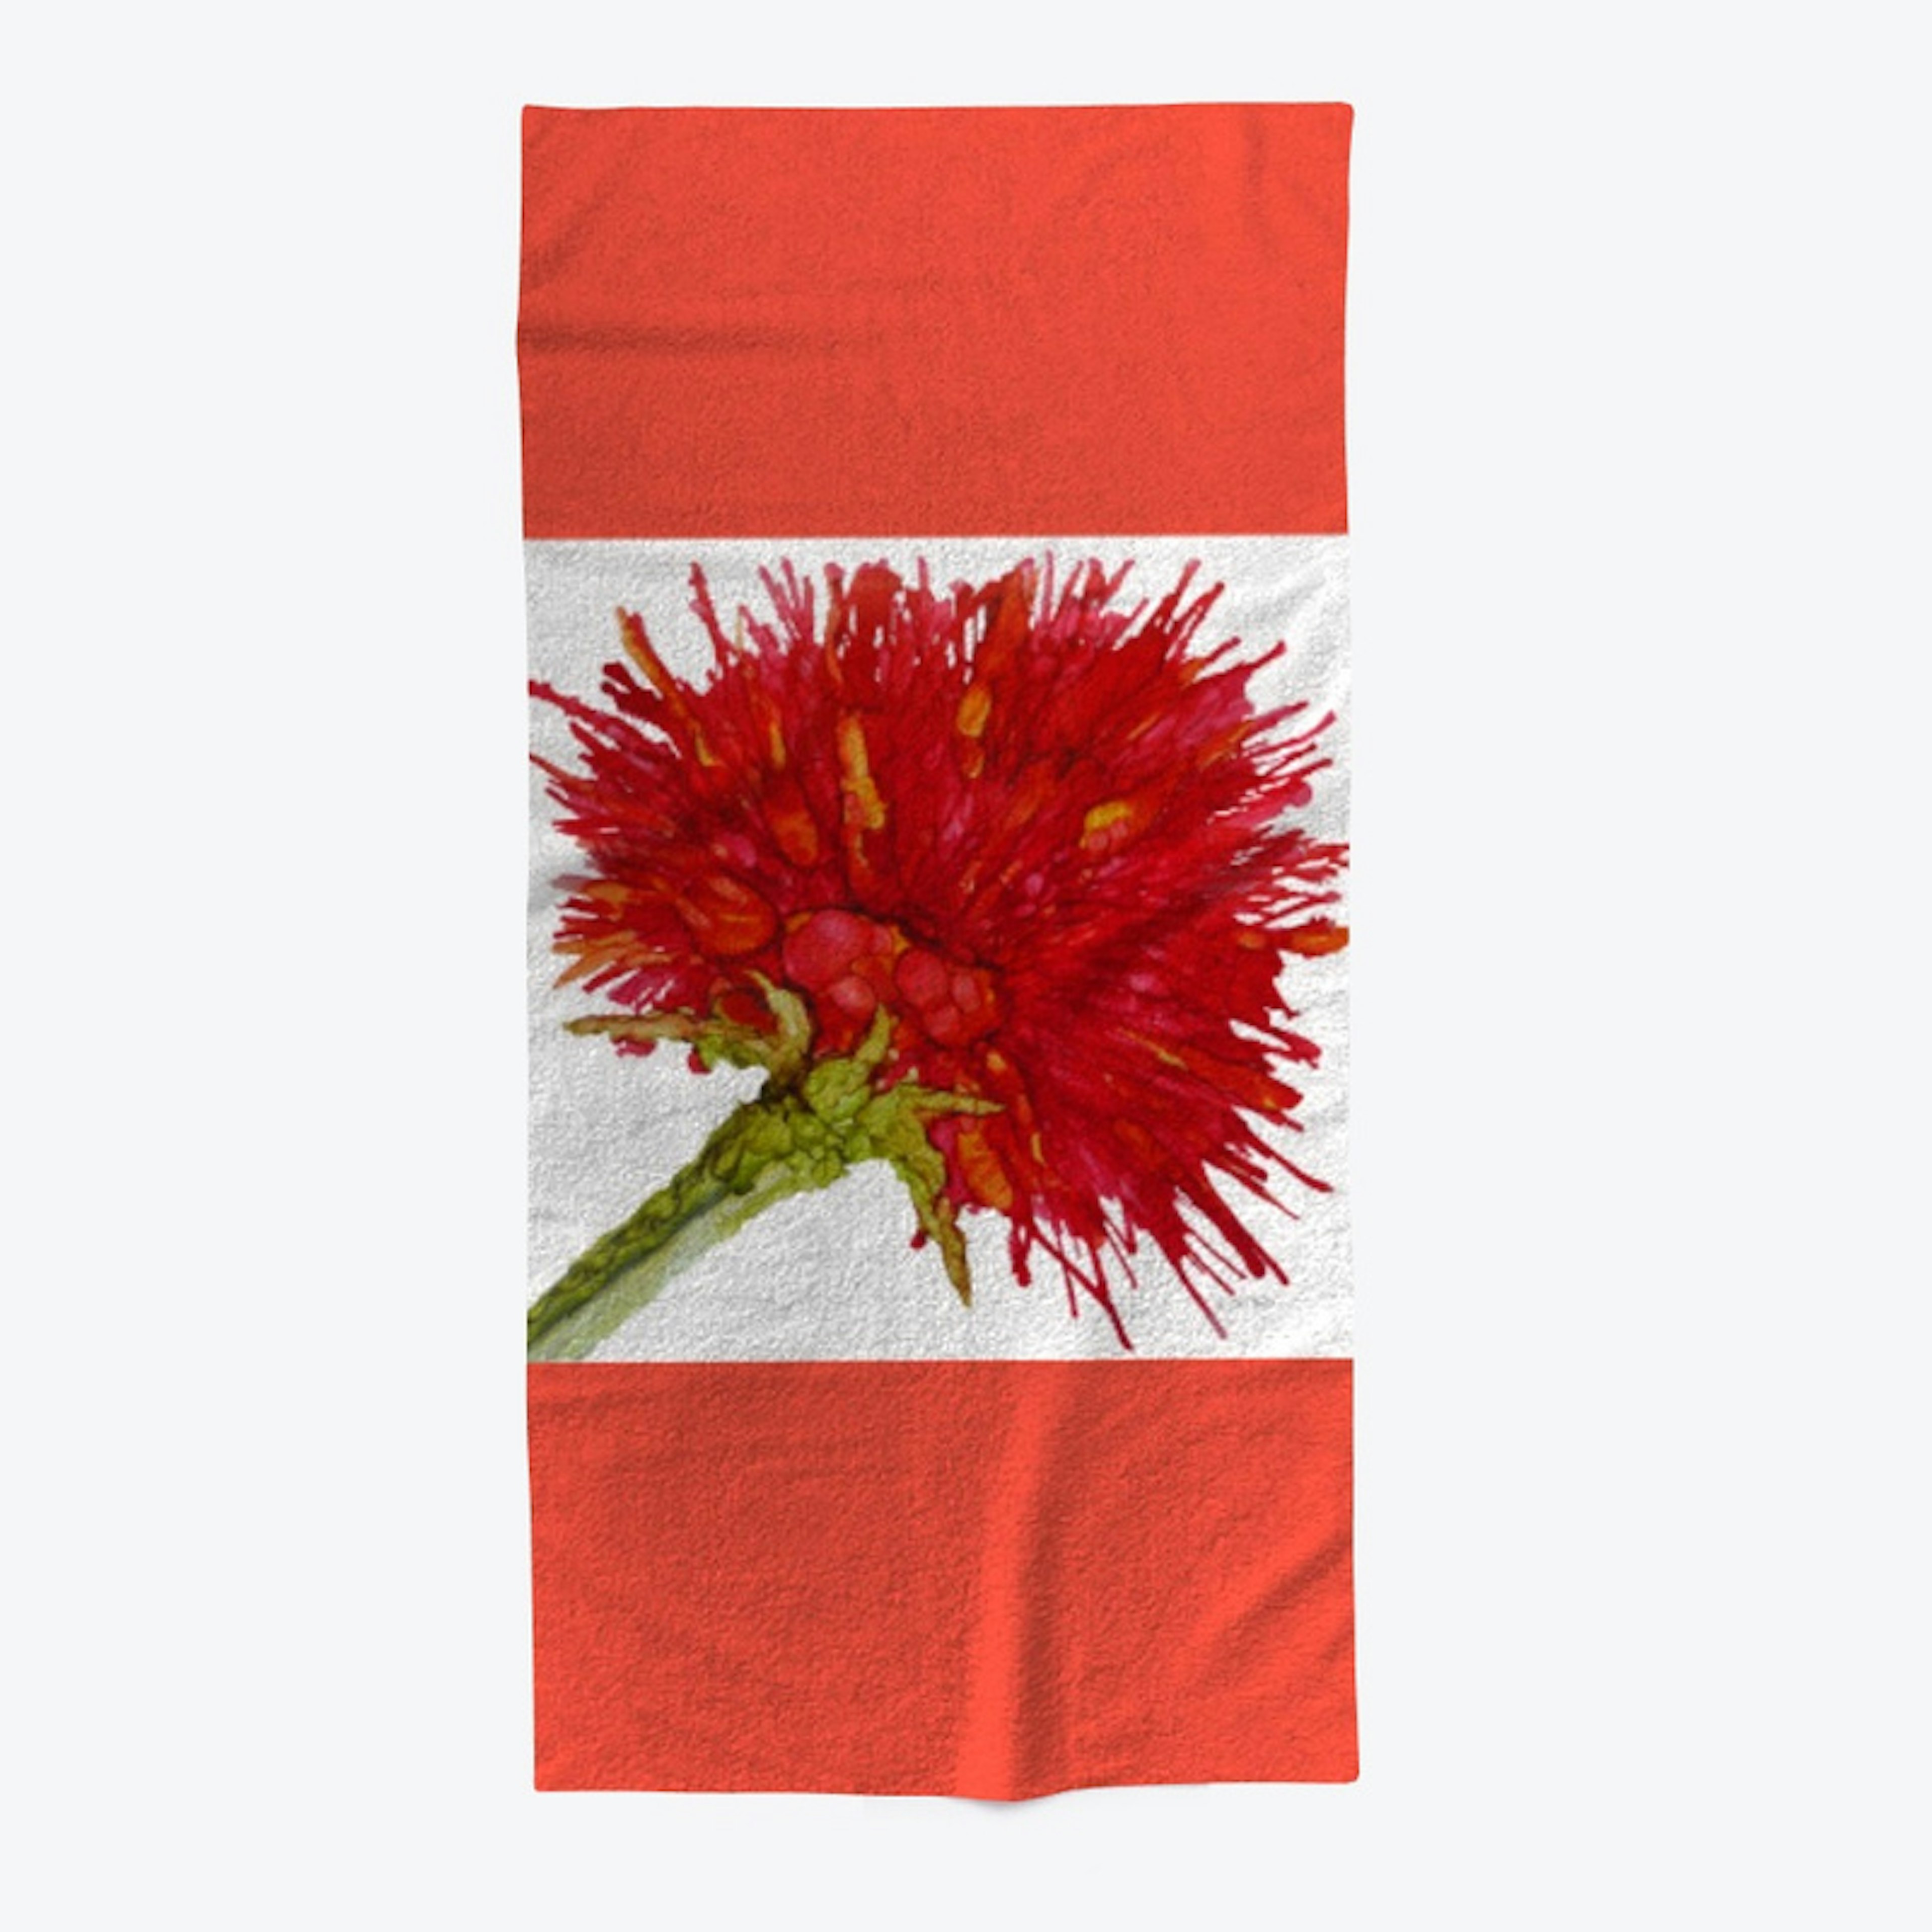 Crimson Red Flower sweats totes